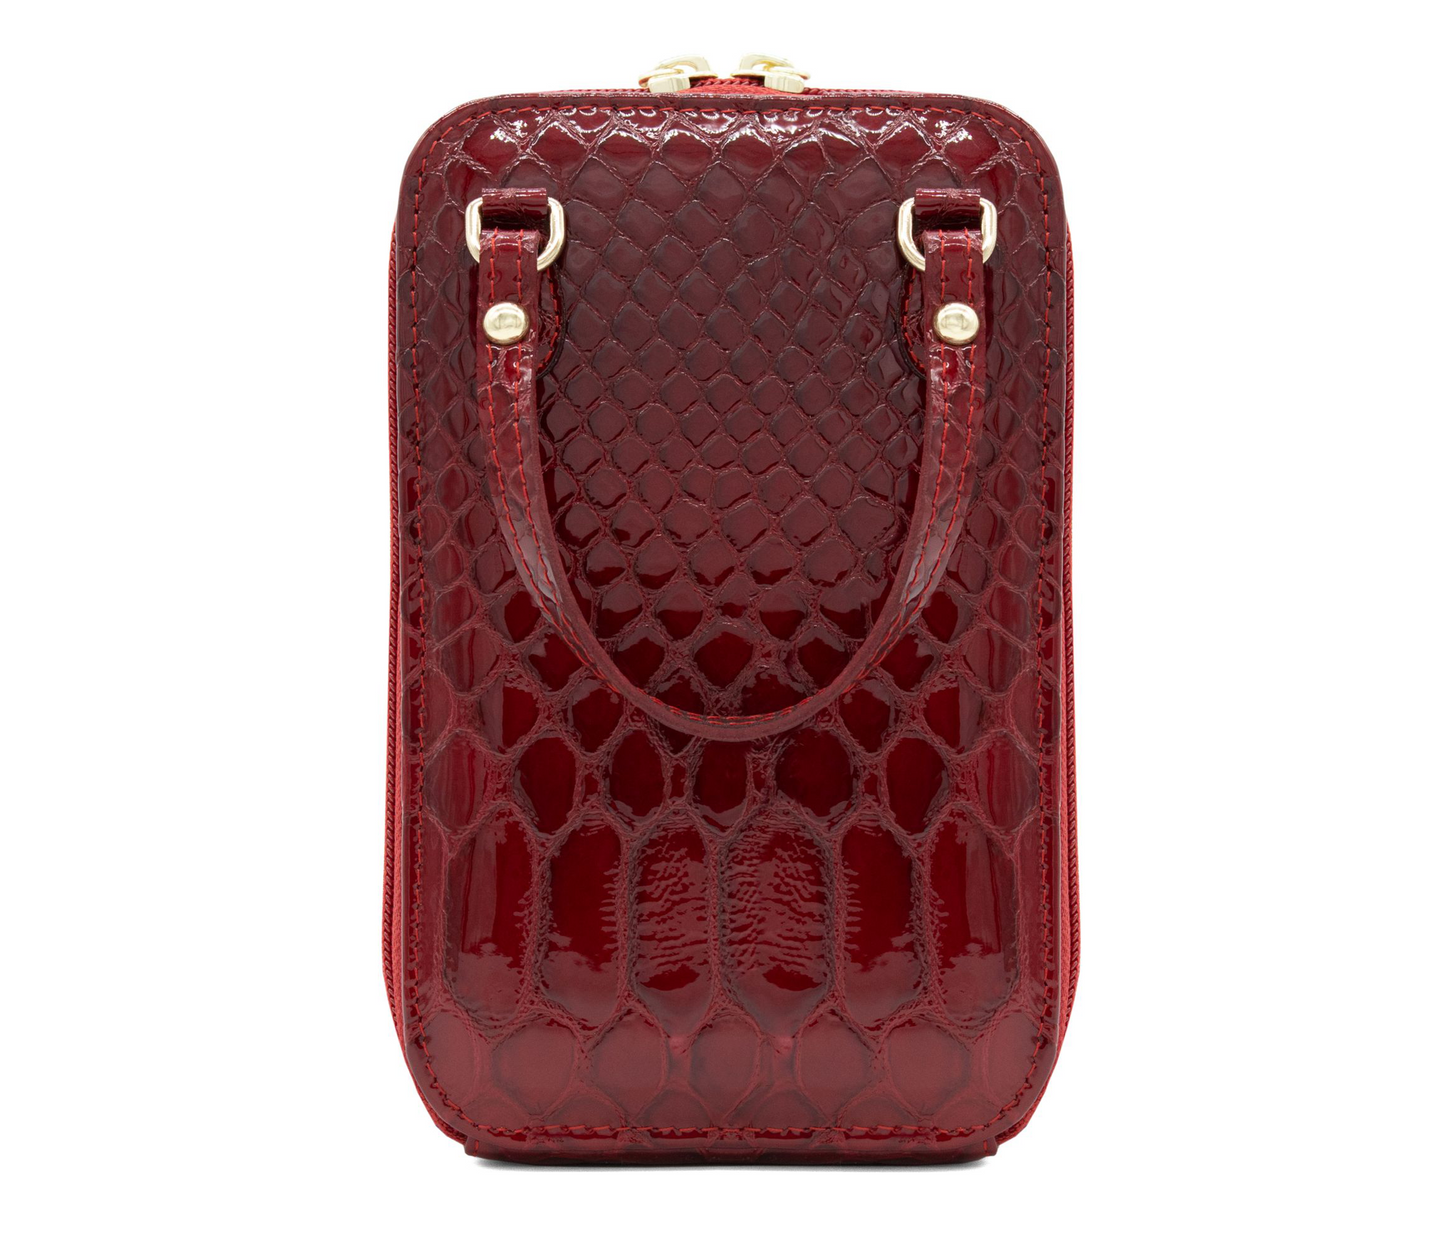 Cavalinho Galope Patent Leather Phone Purse - Red - Artboard3